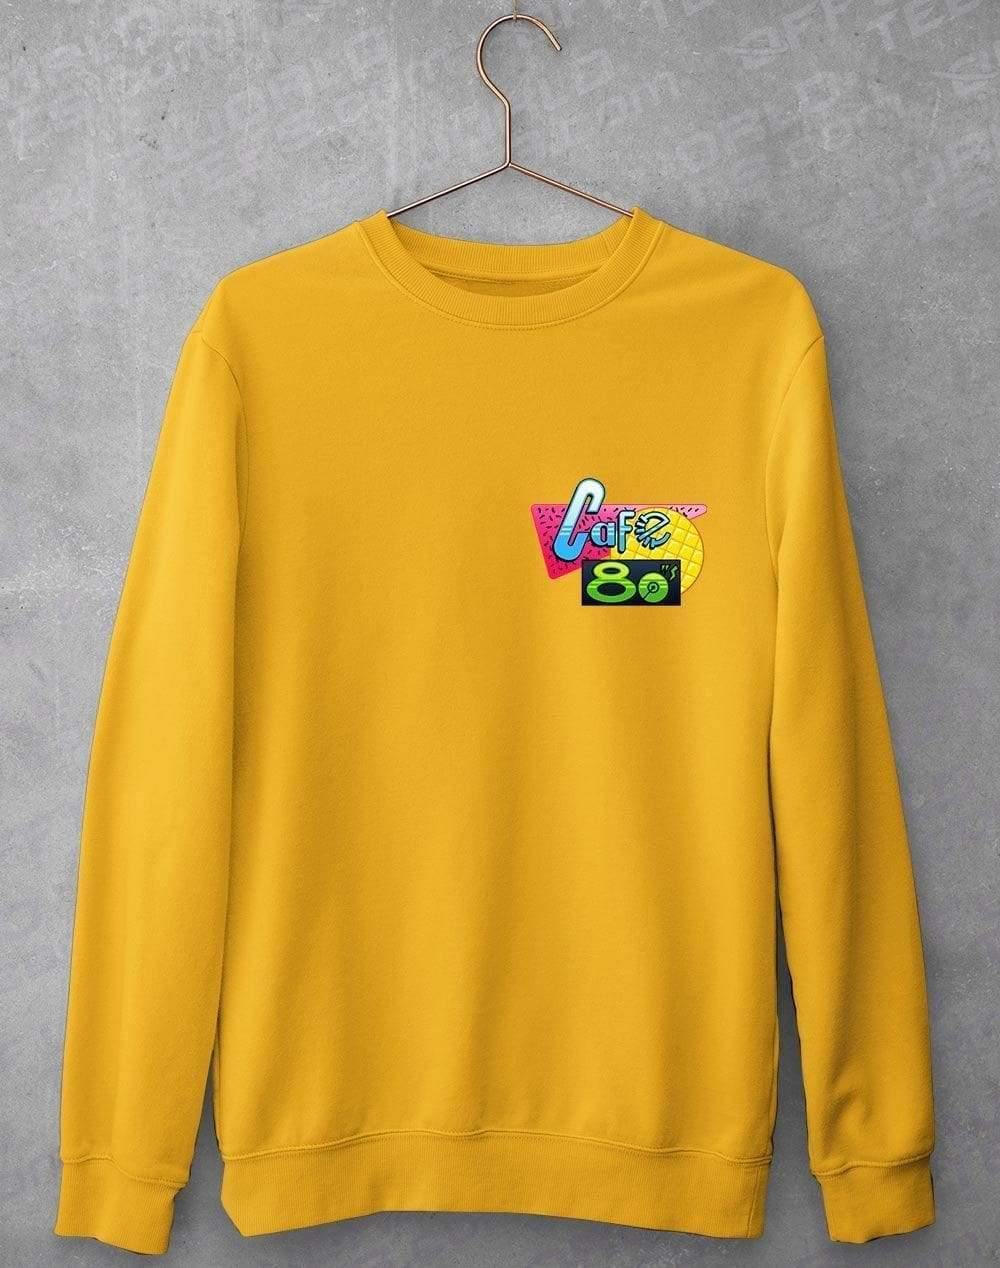 Cafe 80s Pocket Print Sweatshirt S / Gold  - Off World Tees